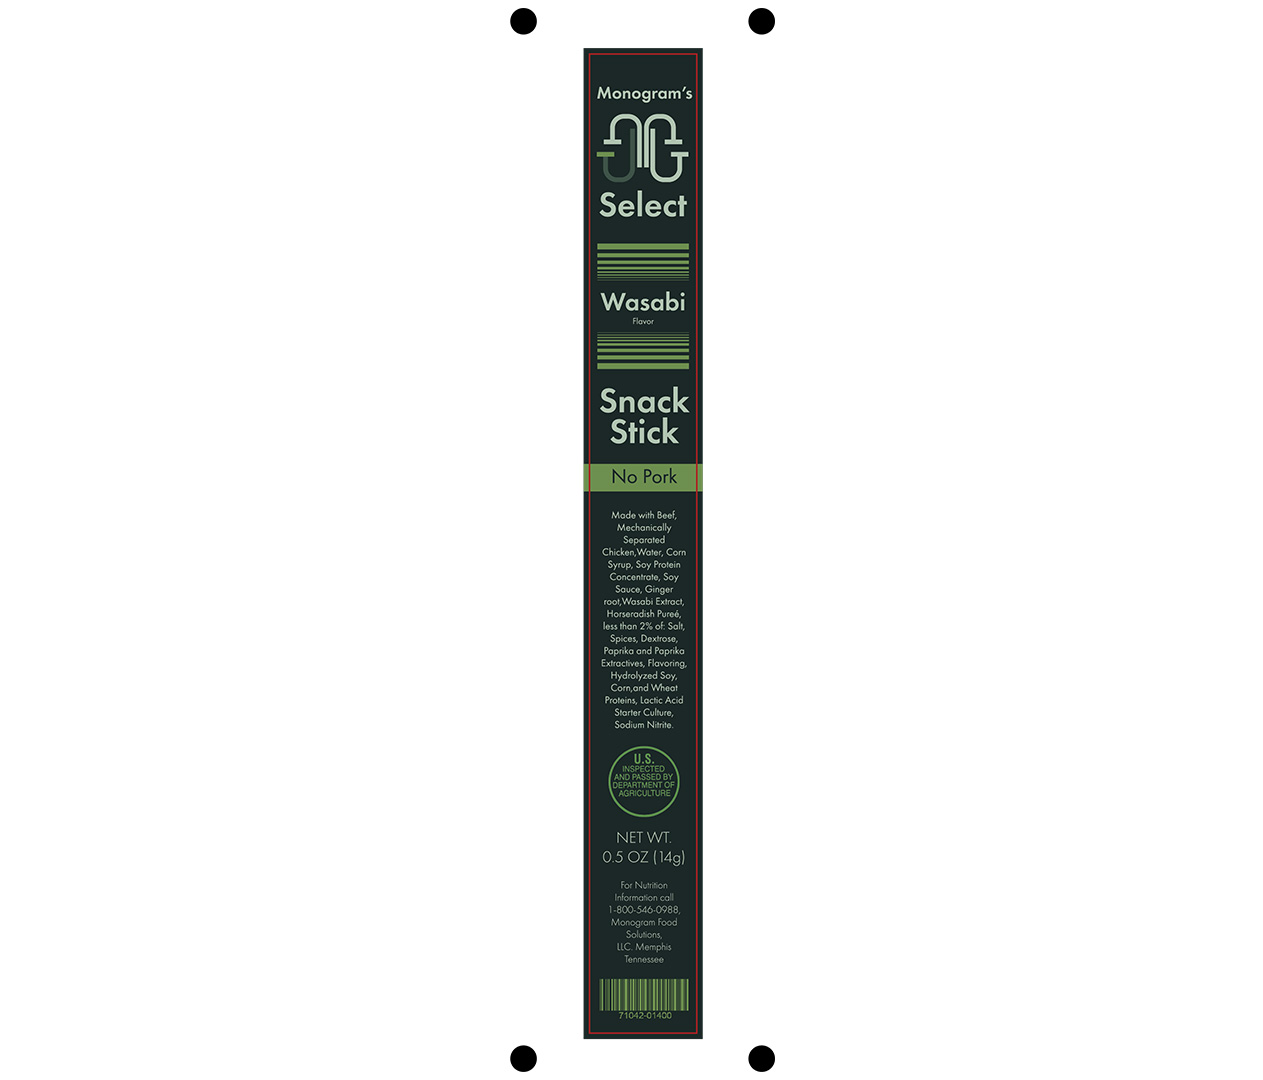 Monogram's Select snack stick dieline